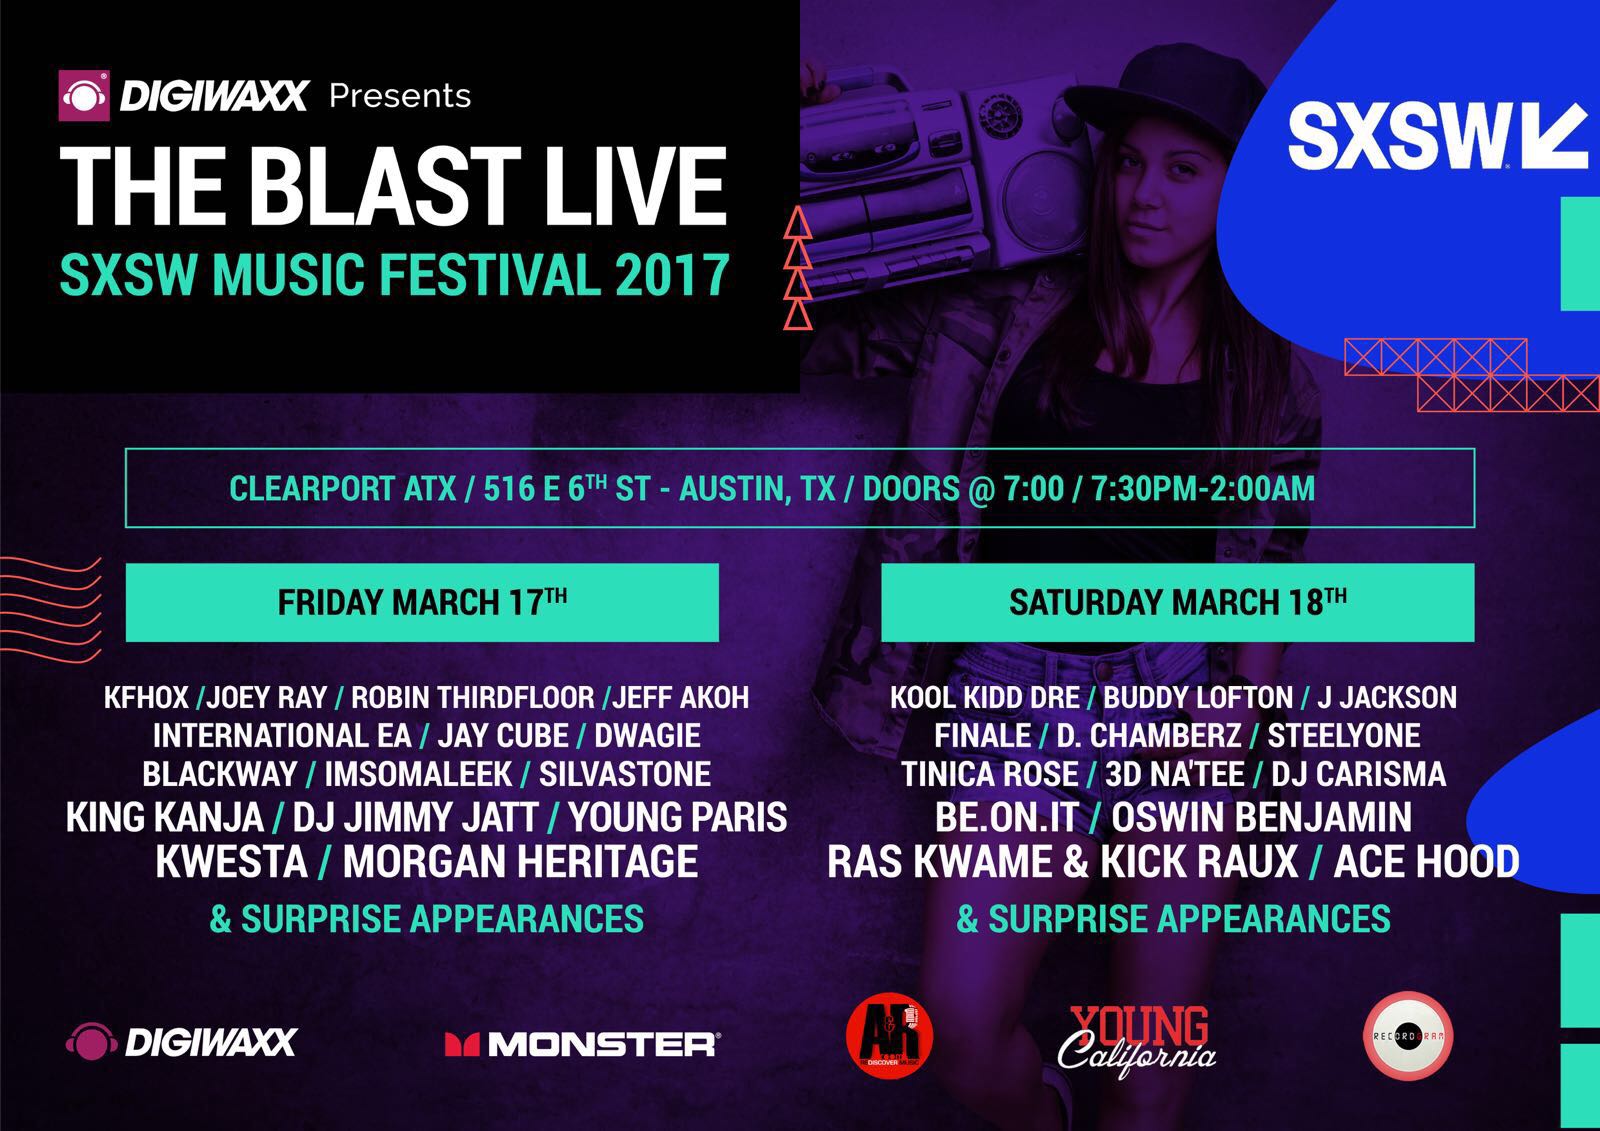 Digiwaxx Presents The Blast Live – SXSW 2017